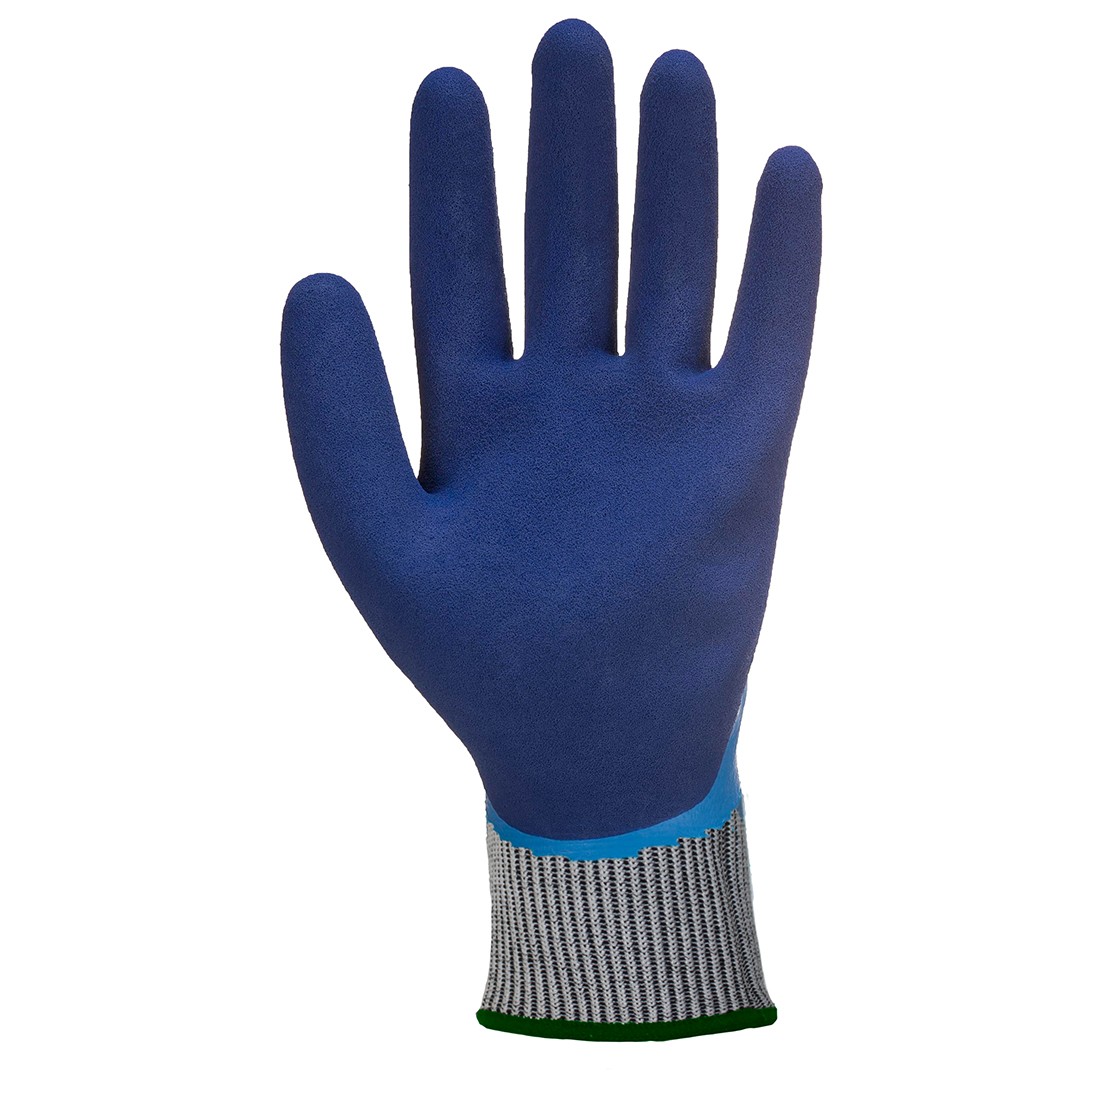 Liquid Pro HR Cut Glove - Personal protection